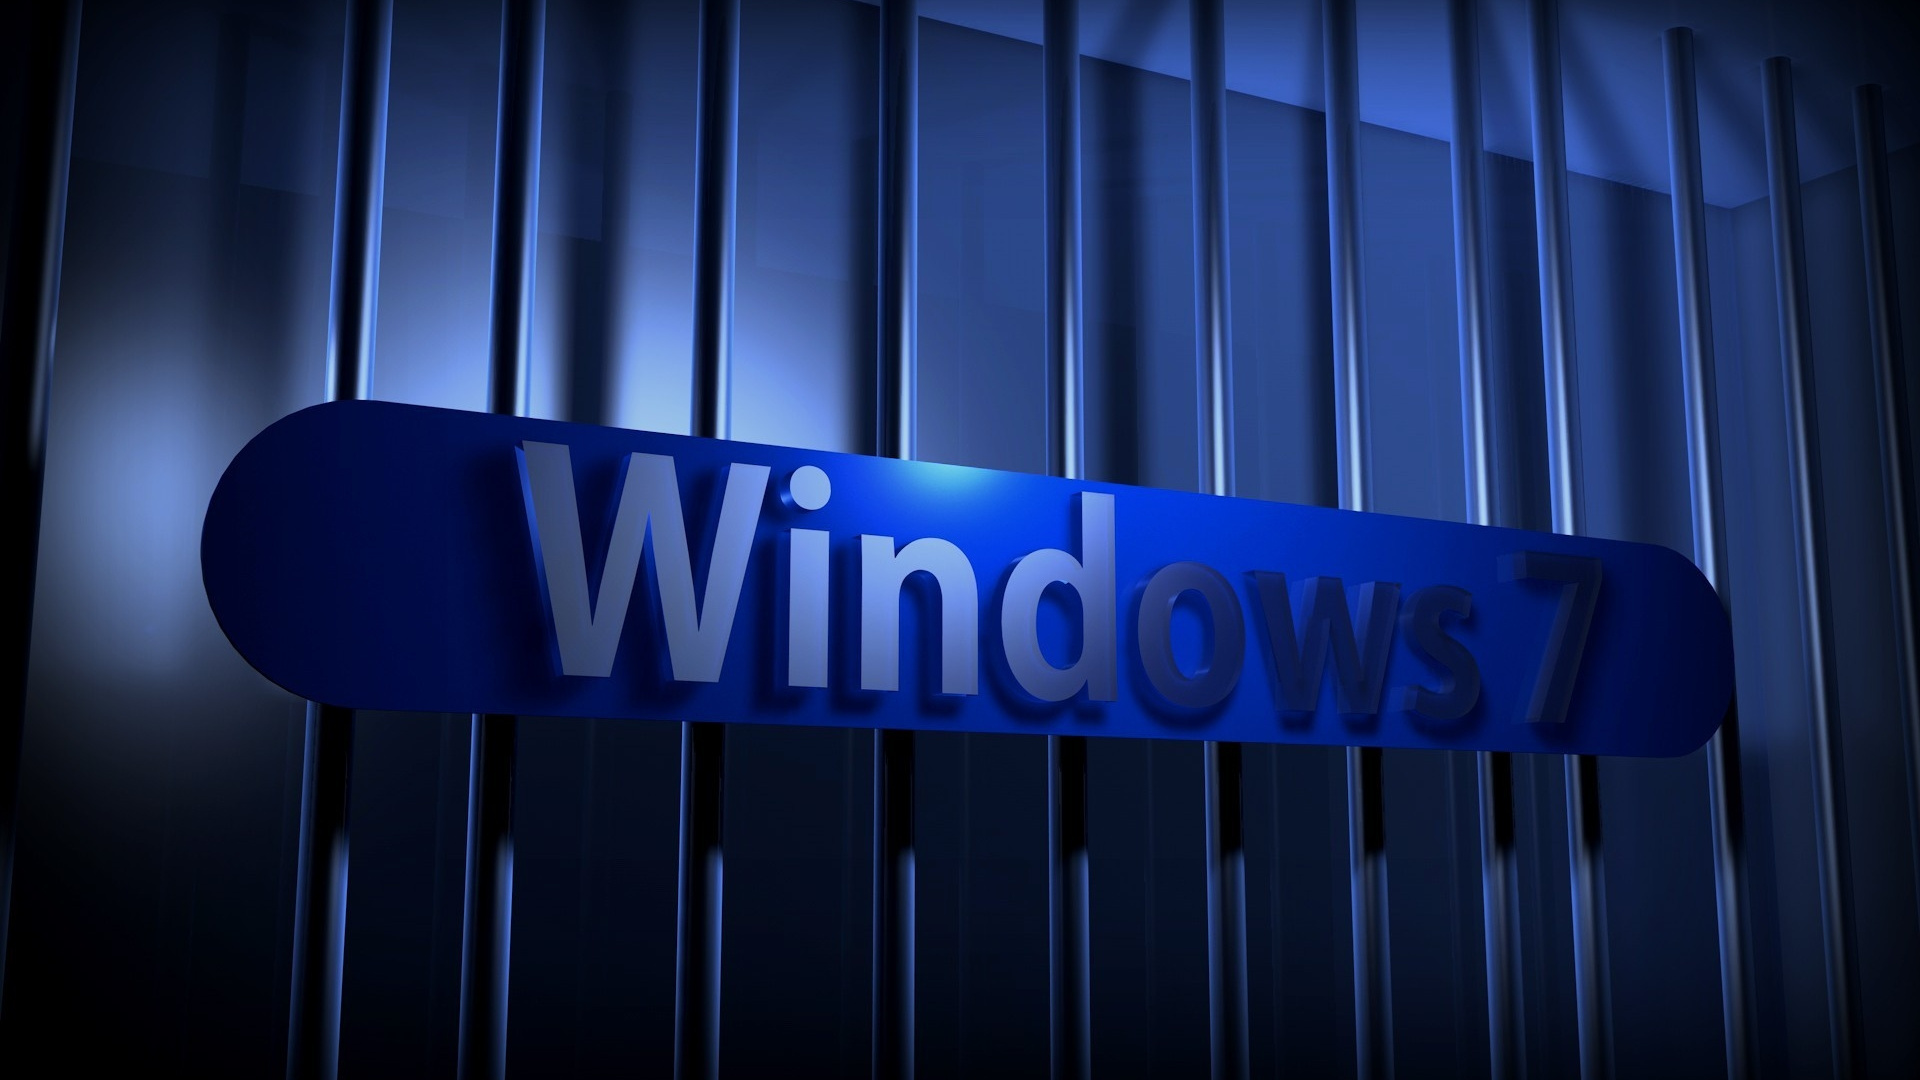 Windows 7, Microsoft Windows, Blue, Lumière, Ligne. Wallpaper in 1920x1080 Resolution